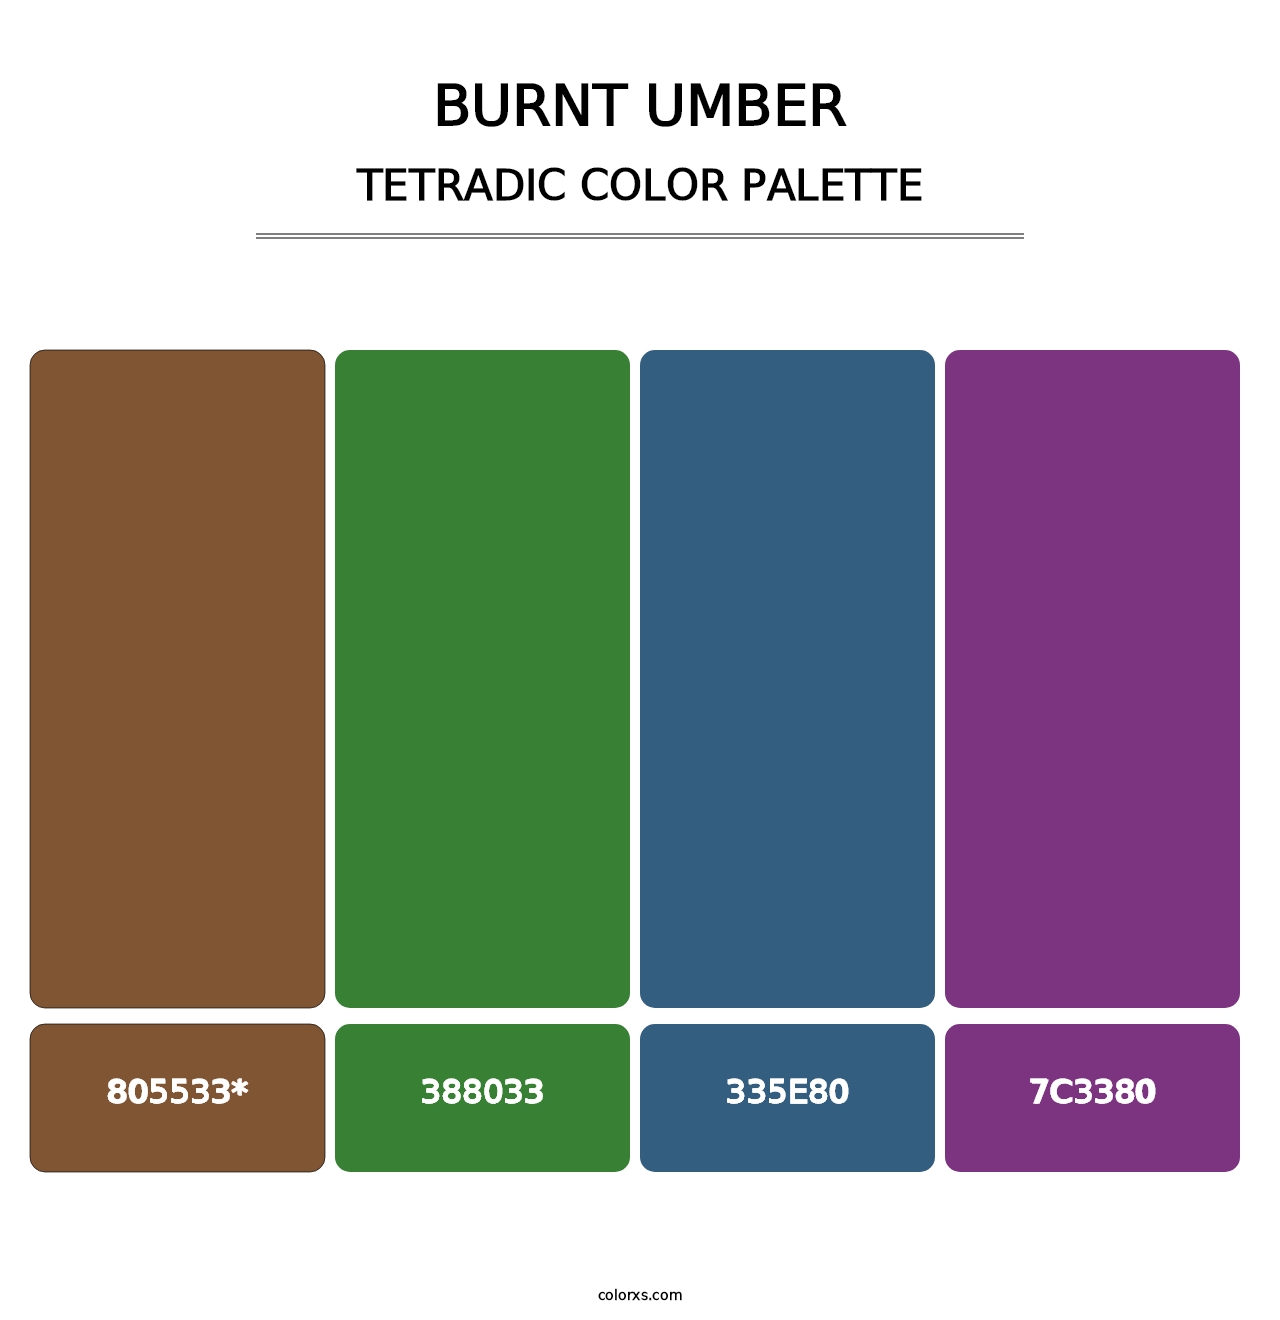 Burnt Umber - Tetradic Color Palette